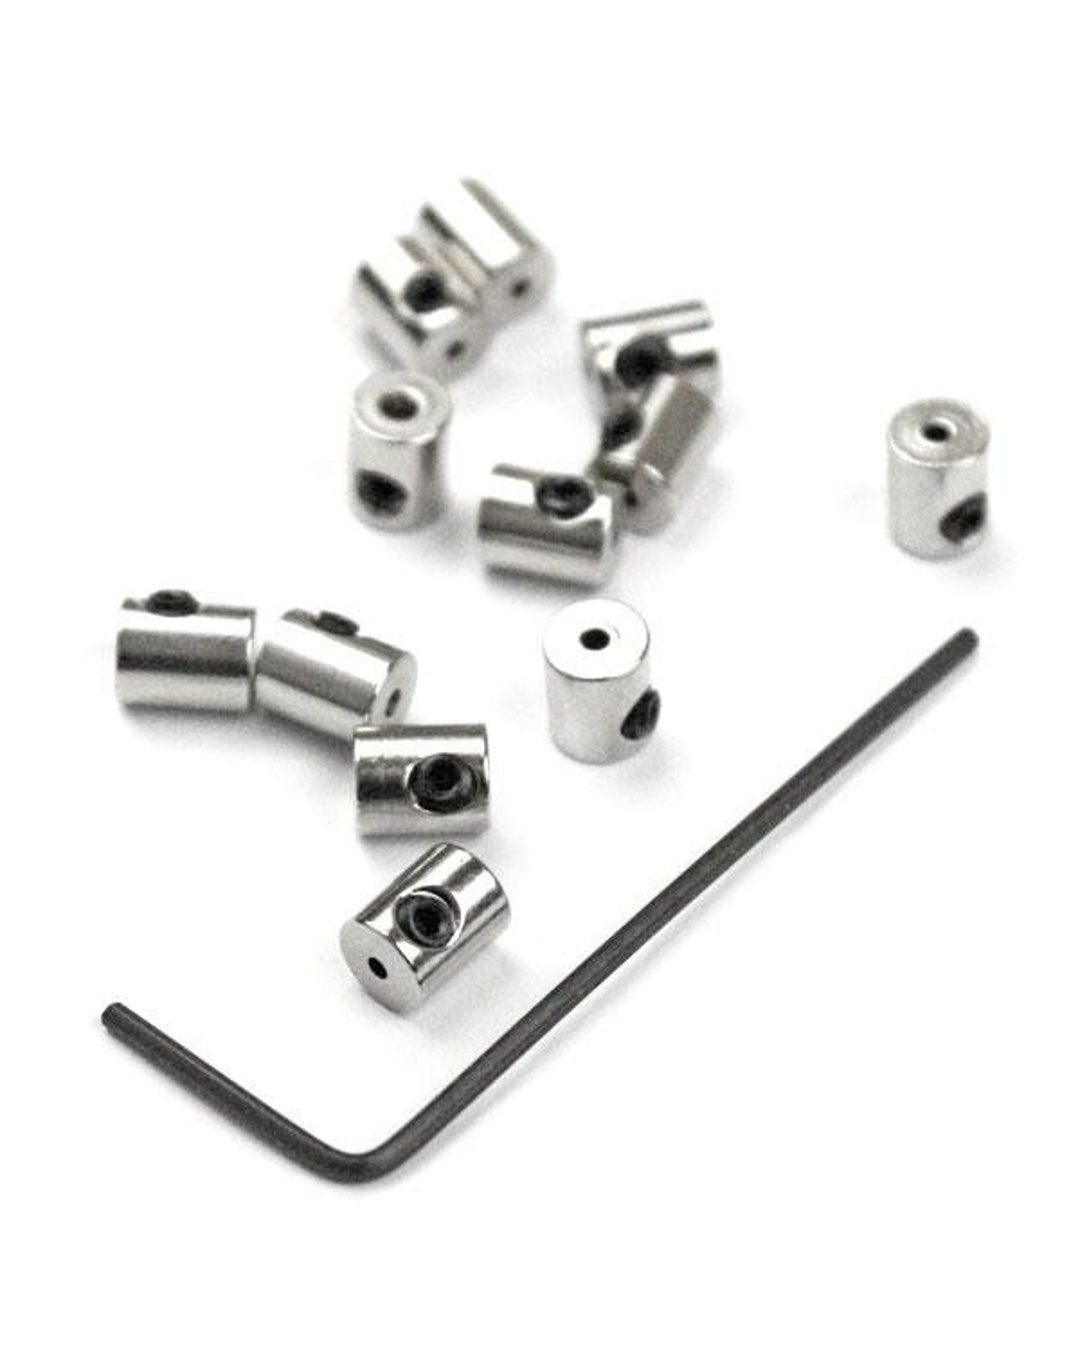 Disney Trading Pin 58938 Locking Pin Backs - Set of 10 with Wrench